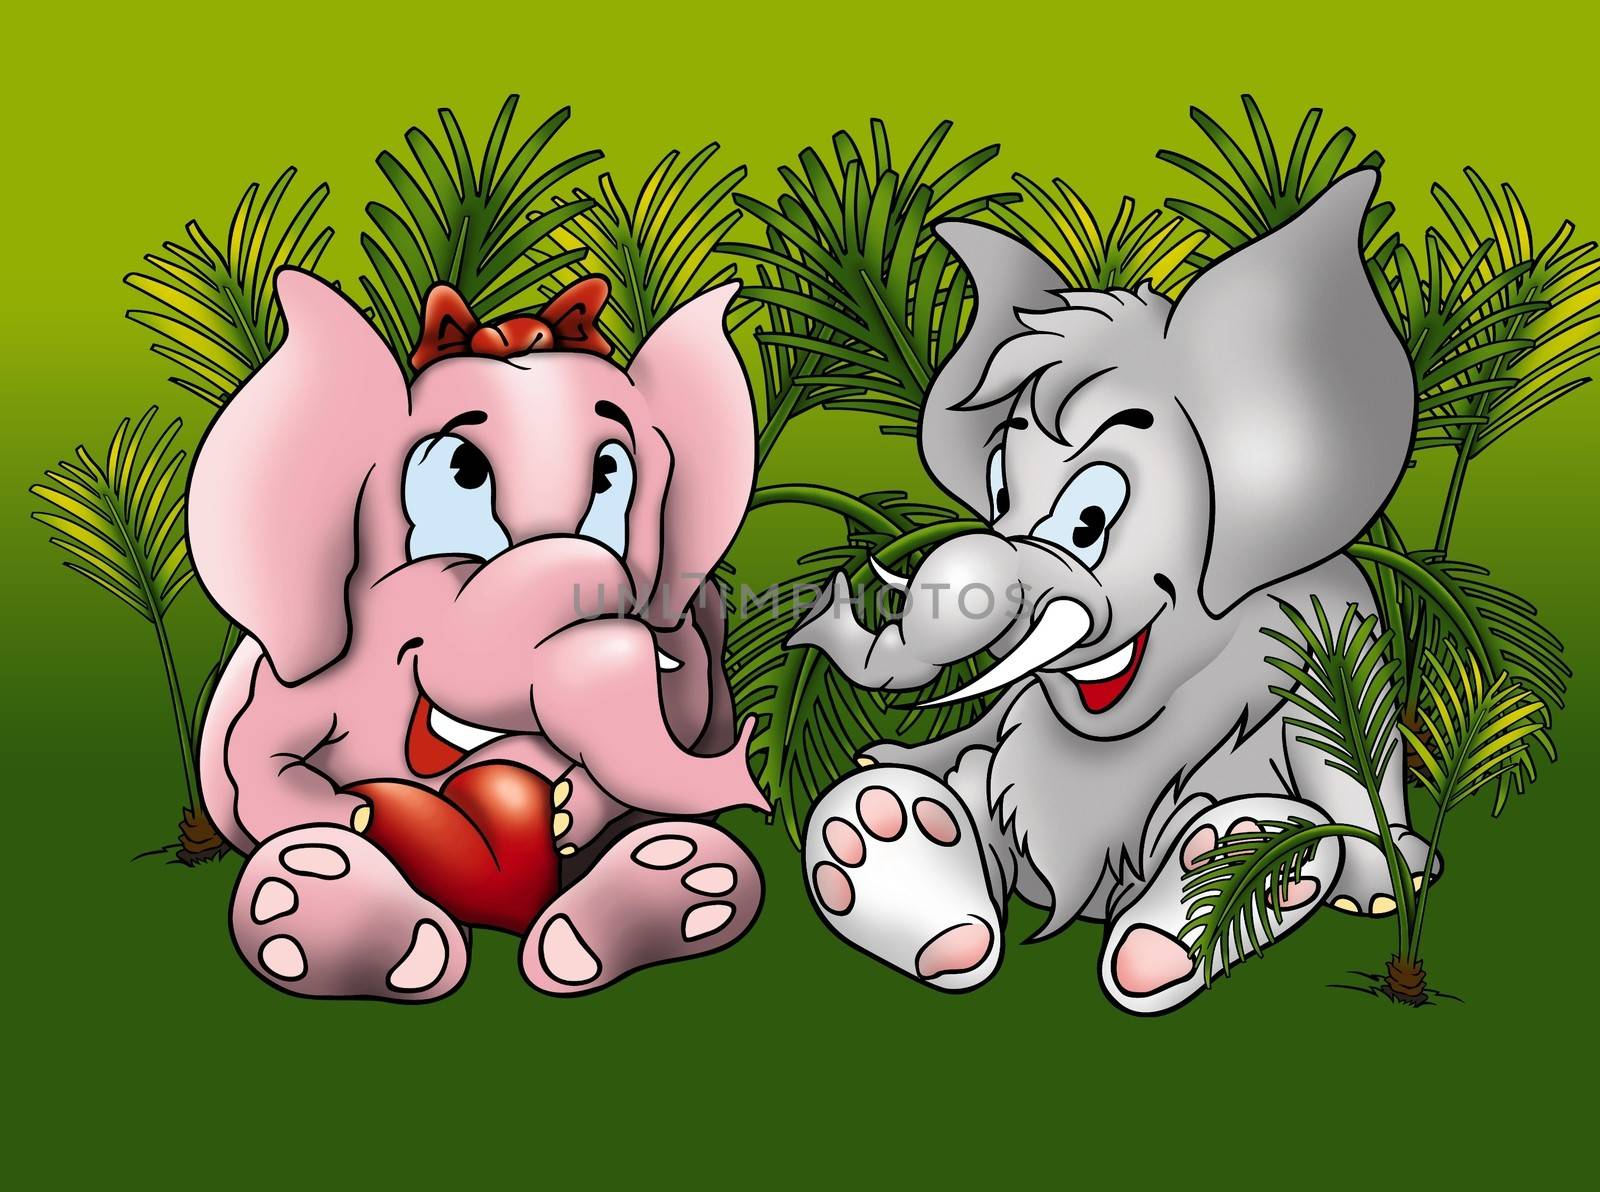 Two Elephants - Cartoon Background Illustration, Bitmap